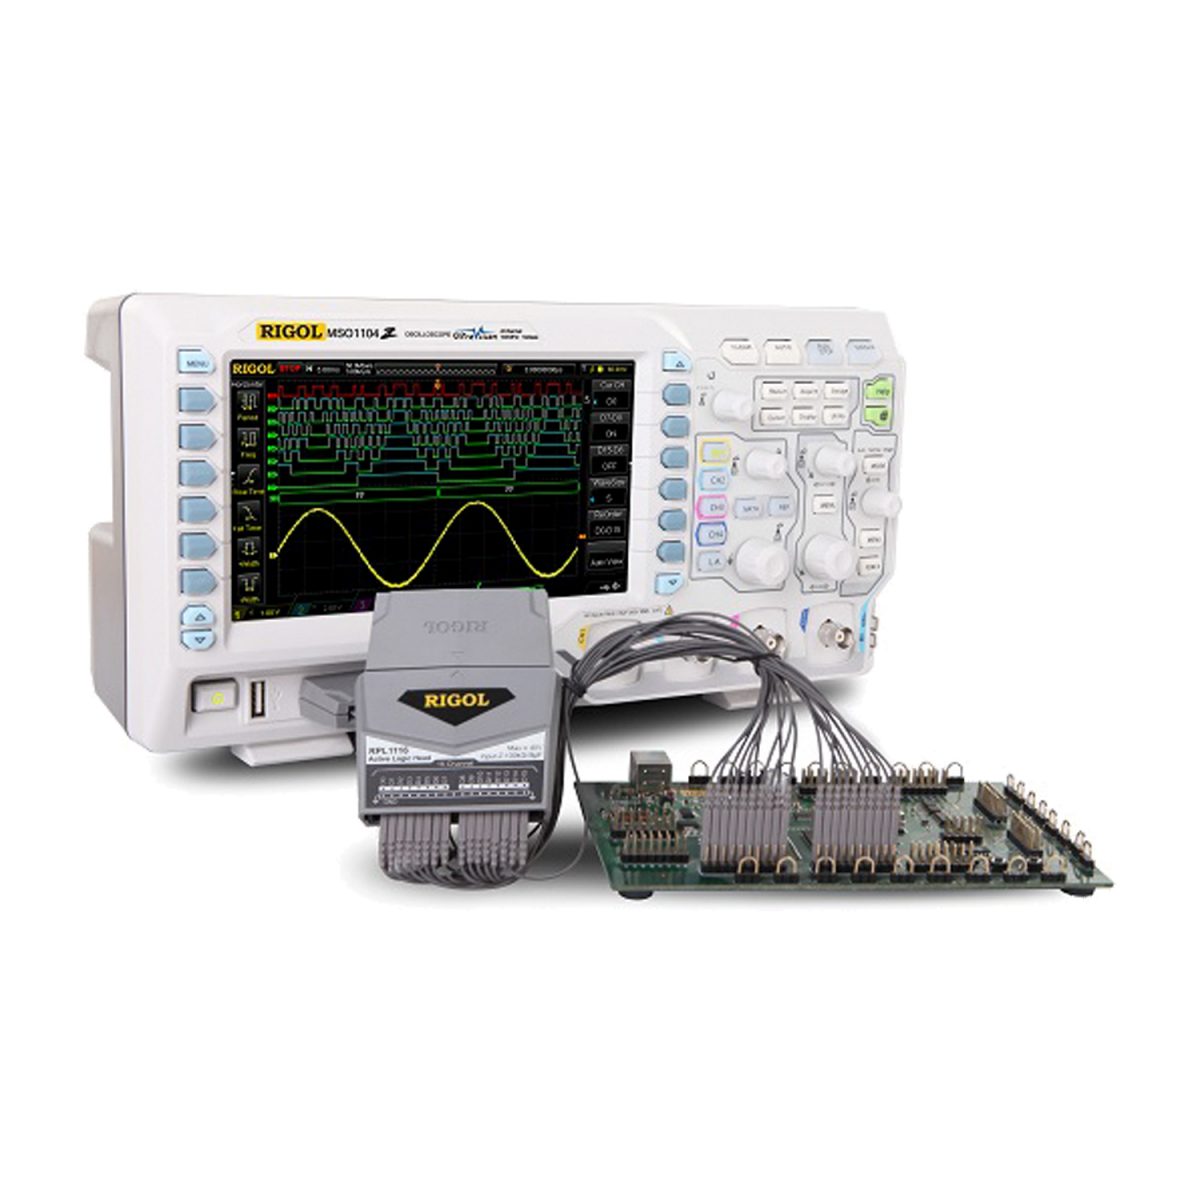 Rigol DS1104Z + Digital Oscilloscope 100MHz 4Channel 1GSa/s and RPL1116 (Optional Logic Probe)